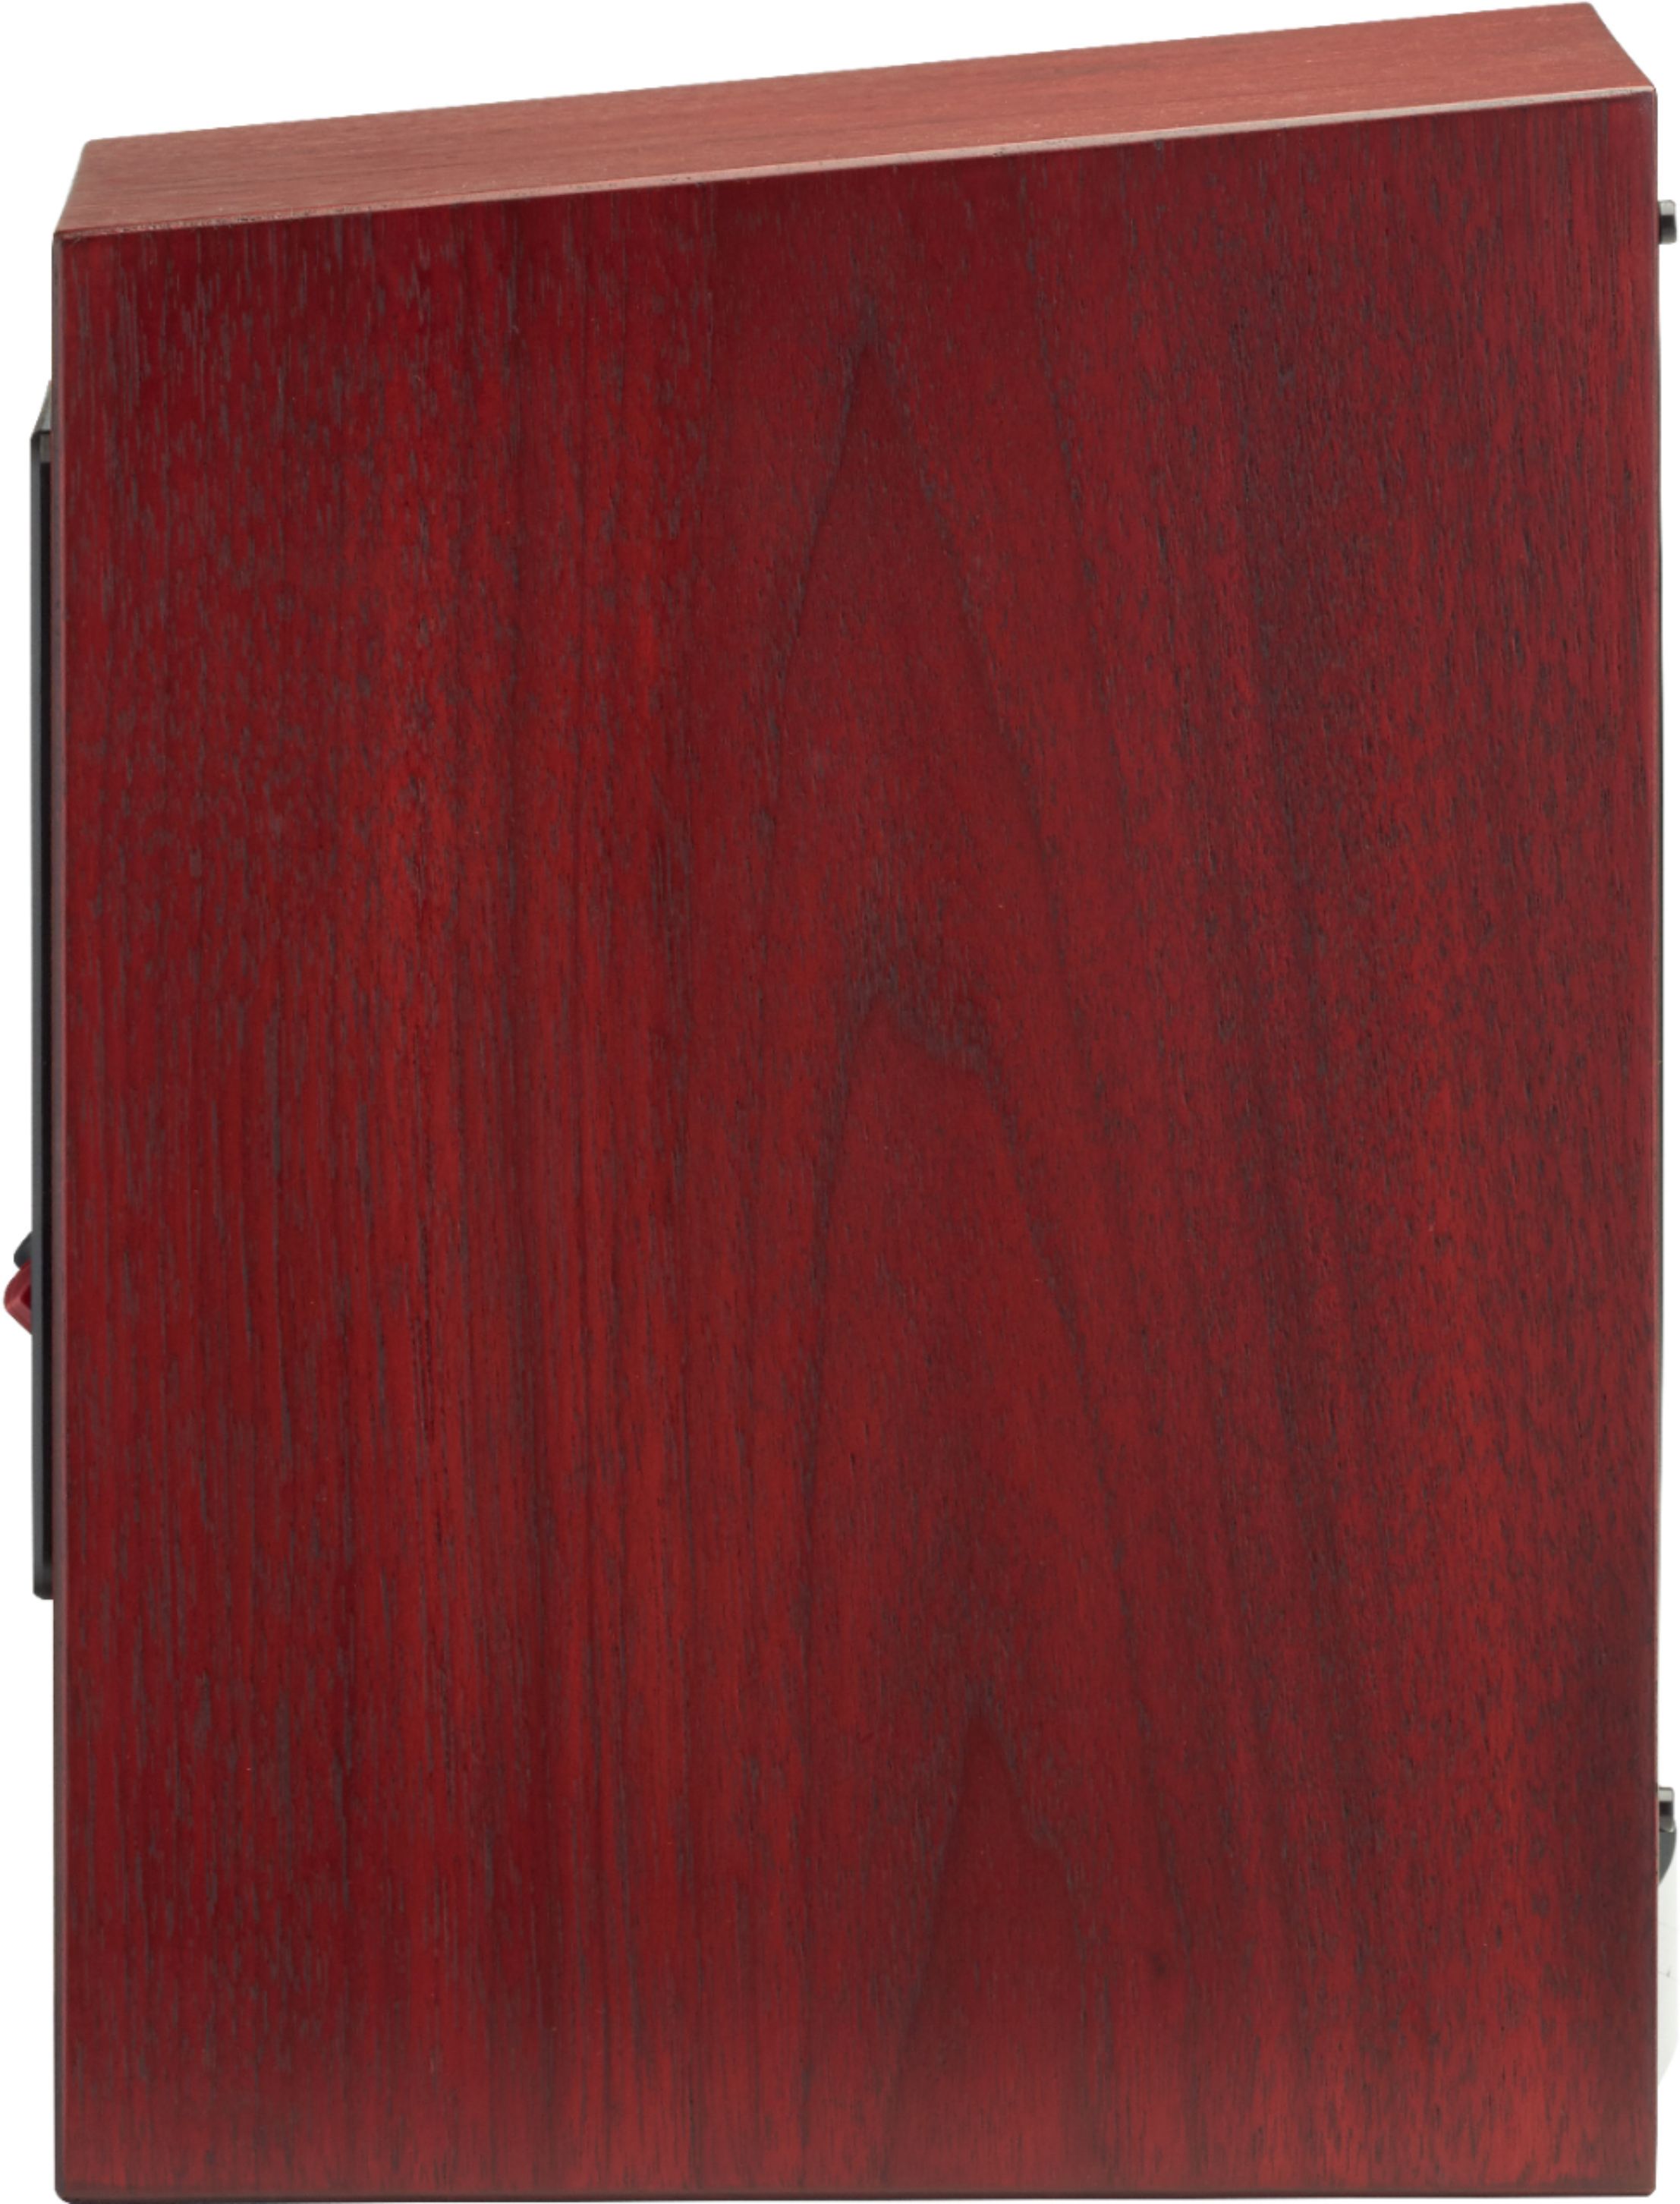 Left View: MartinLogan - Motion 6-1/2" Passive 2-Way Floorstanding Speaker (Each) - Red Walnut